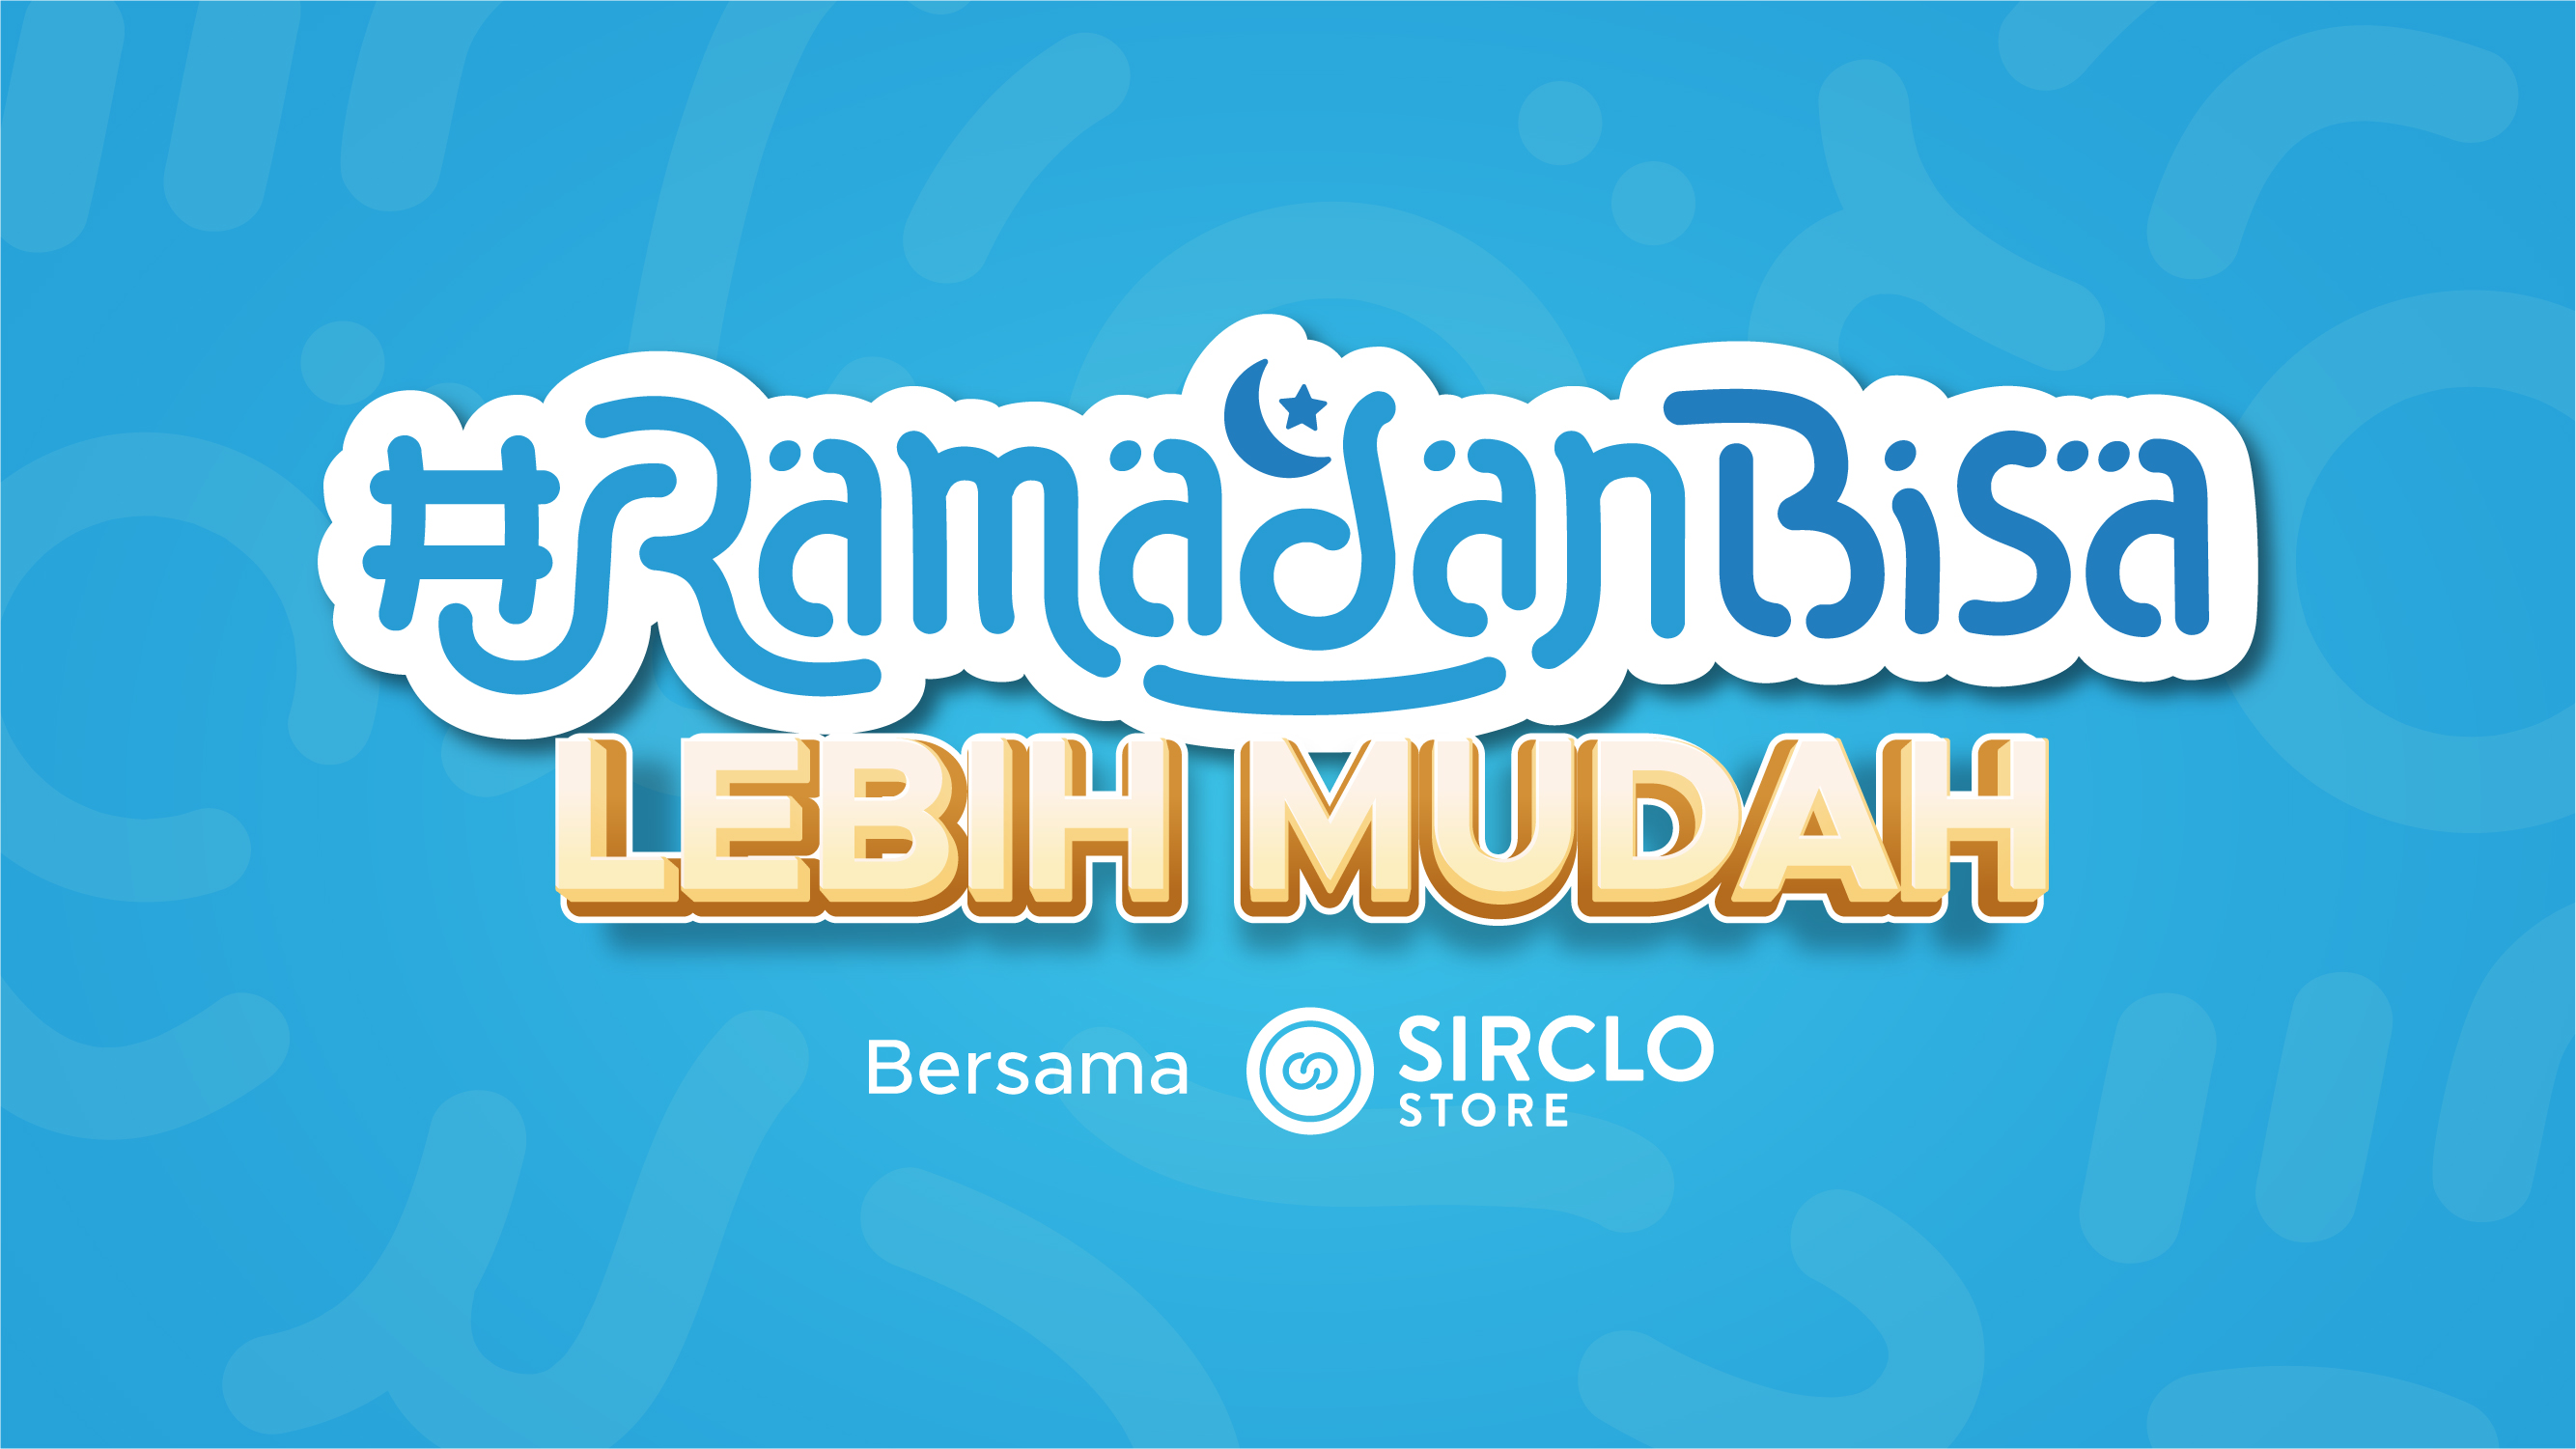 #RamadanBisa Lebih Mudah Jualan di Marketplace Pakai SIRCLO Store